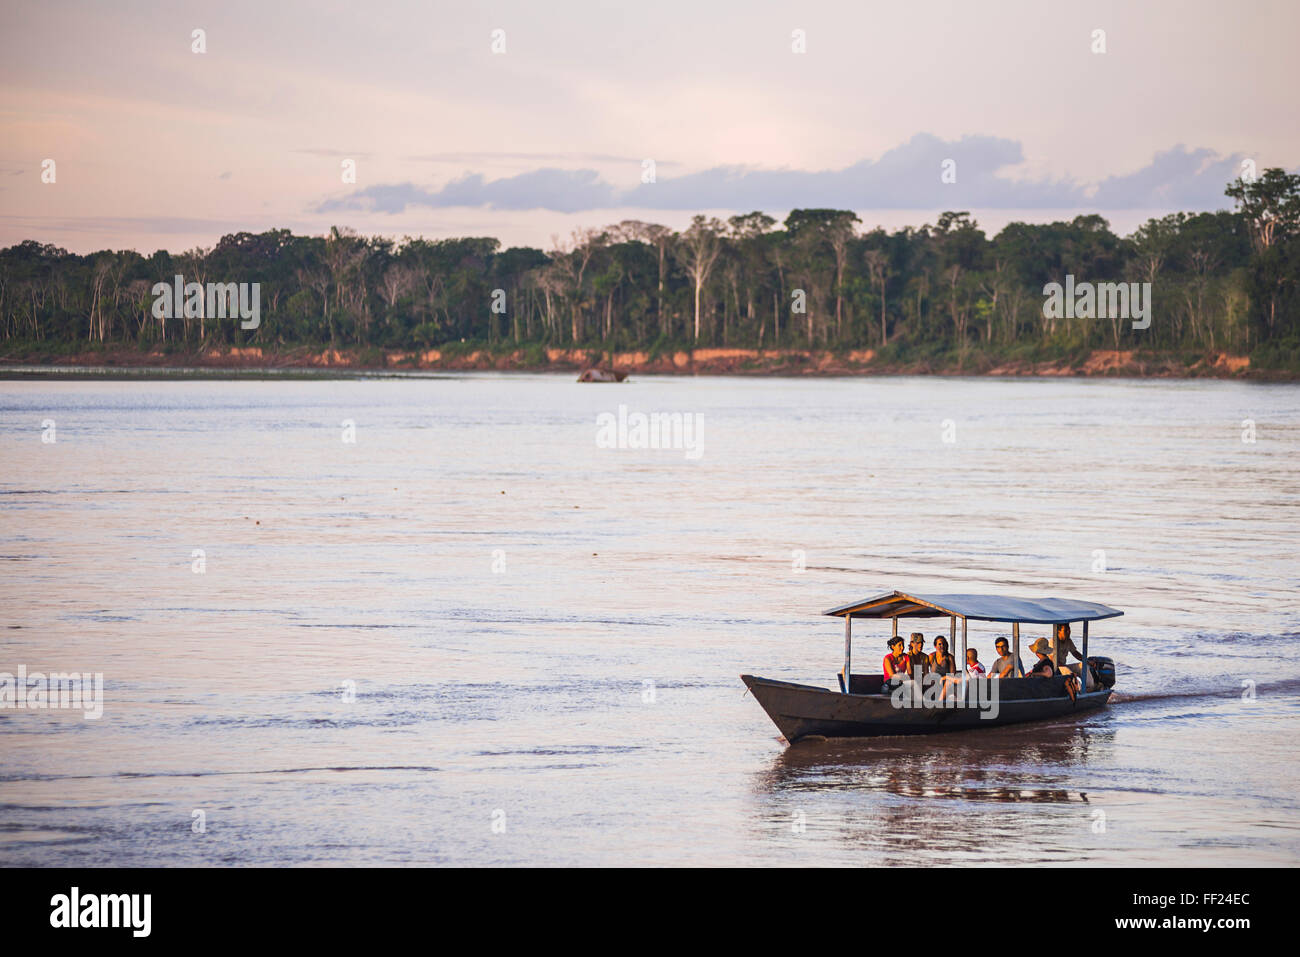 Amazonas boot -Fotos und -Bildmaterial in hoher Auflösung – Alamy